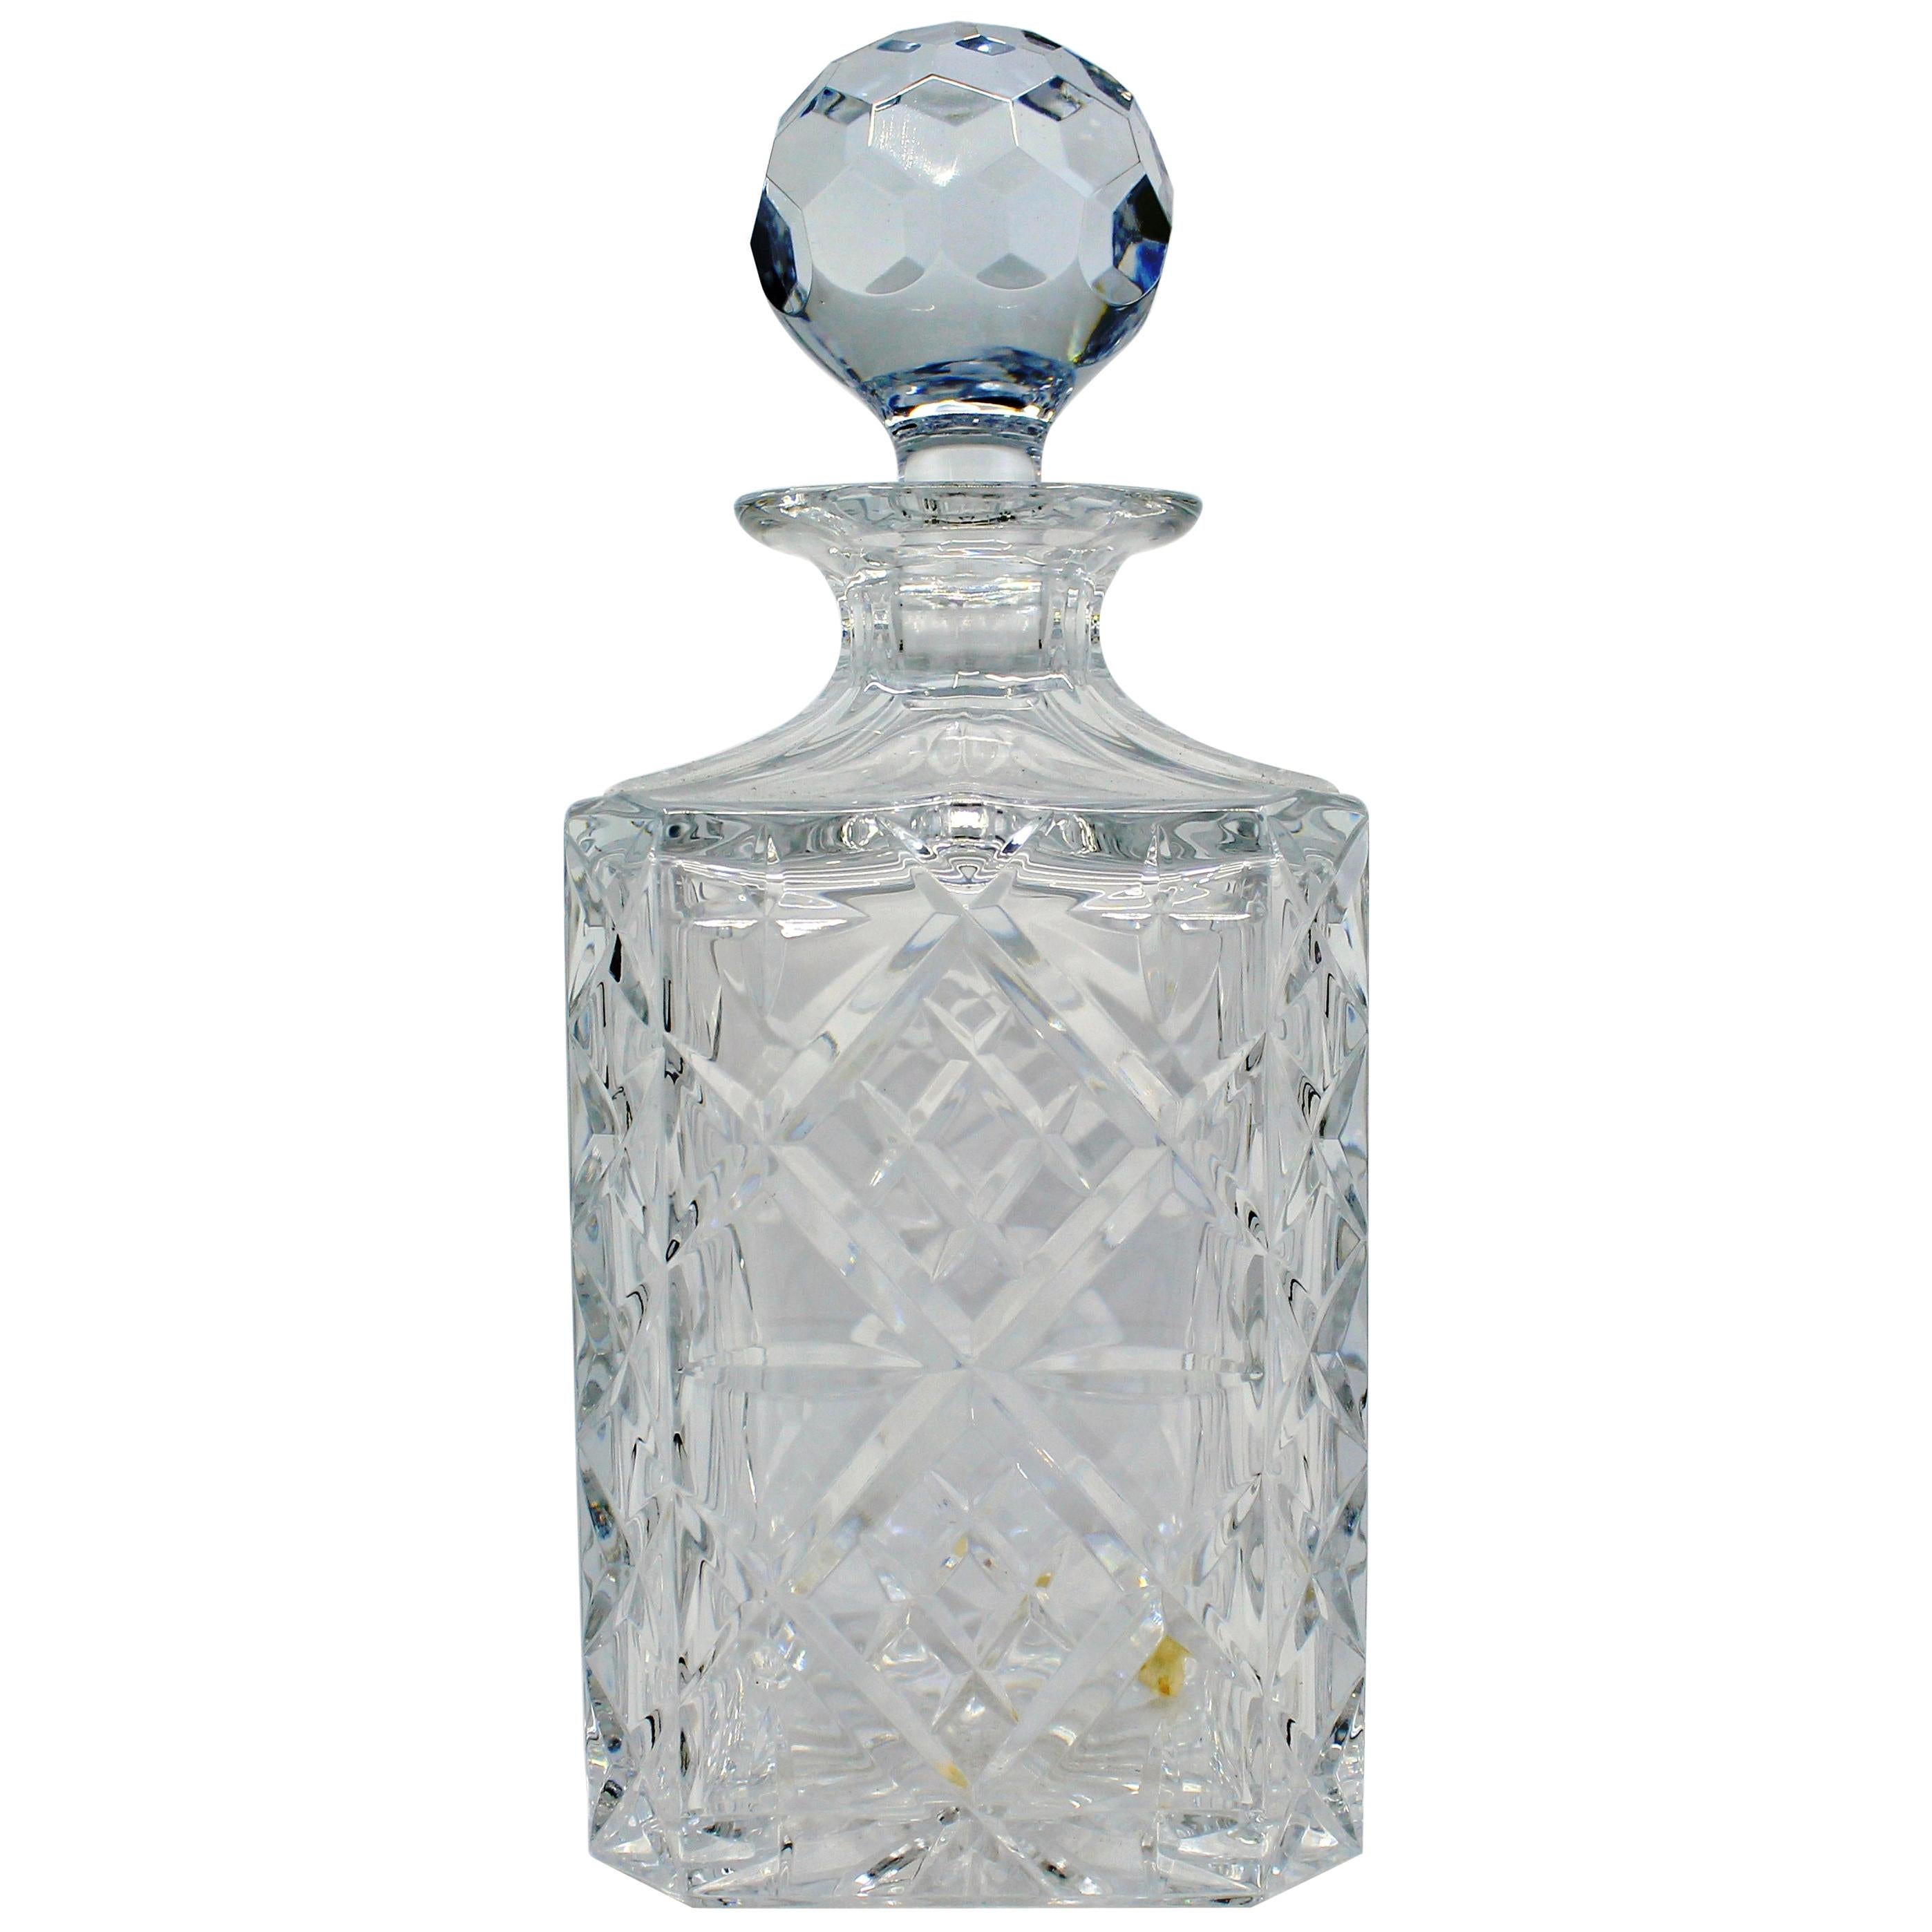 20th Century English Cut Glass Crystal Square Spirit Decanter